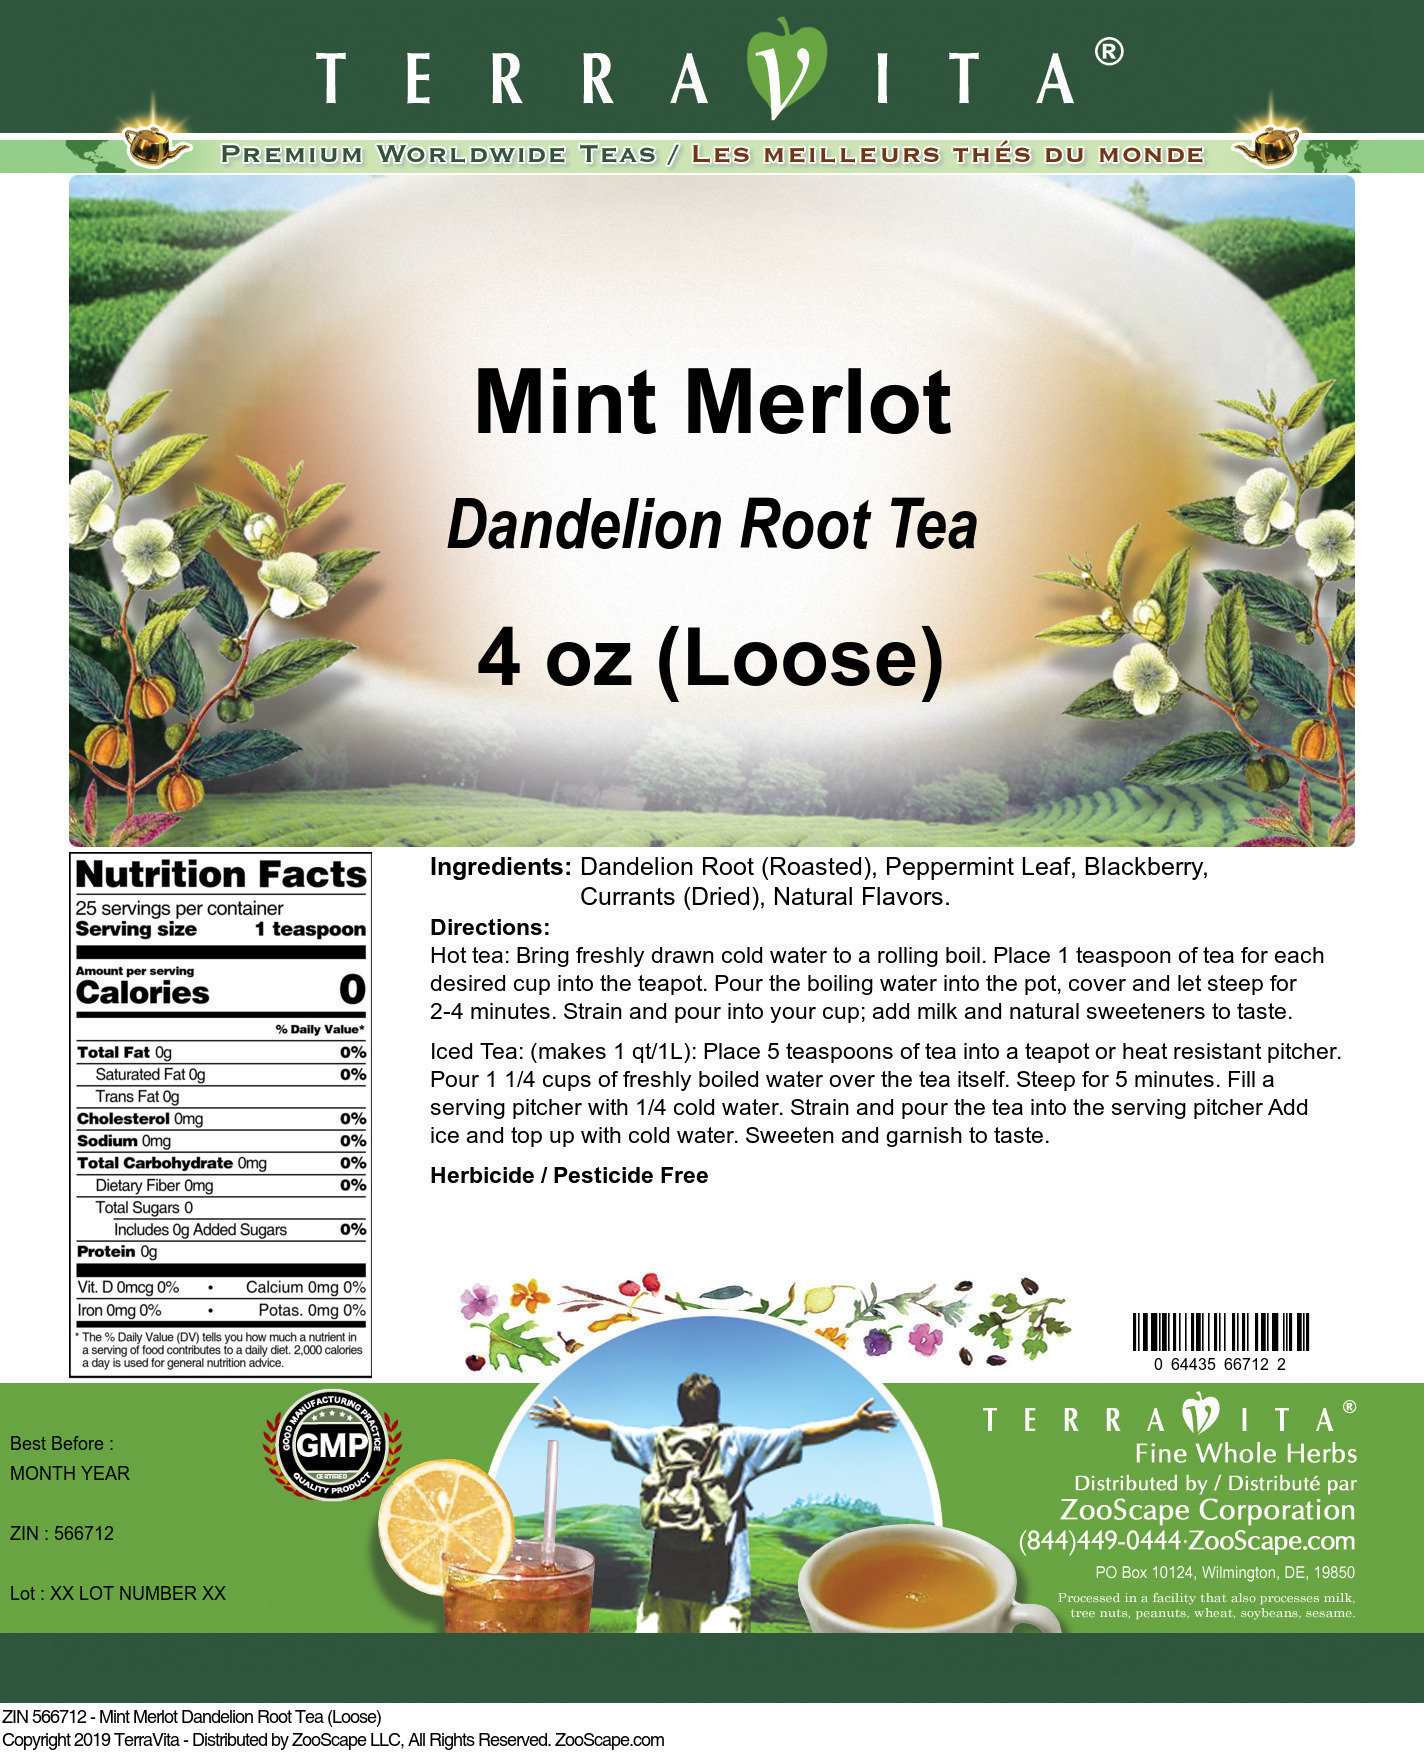 Mint Merlot Dandelion Root Tea (Loose) - Label